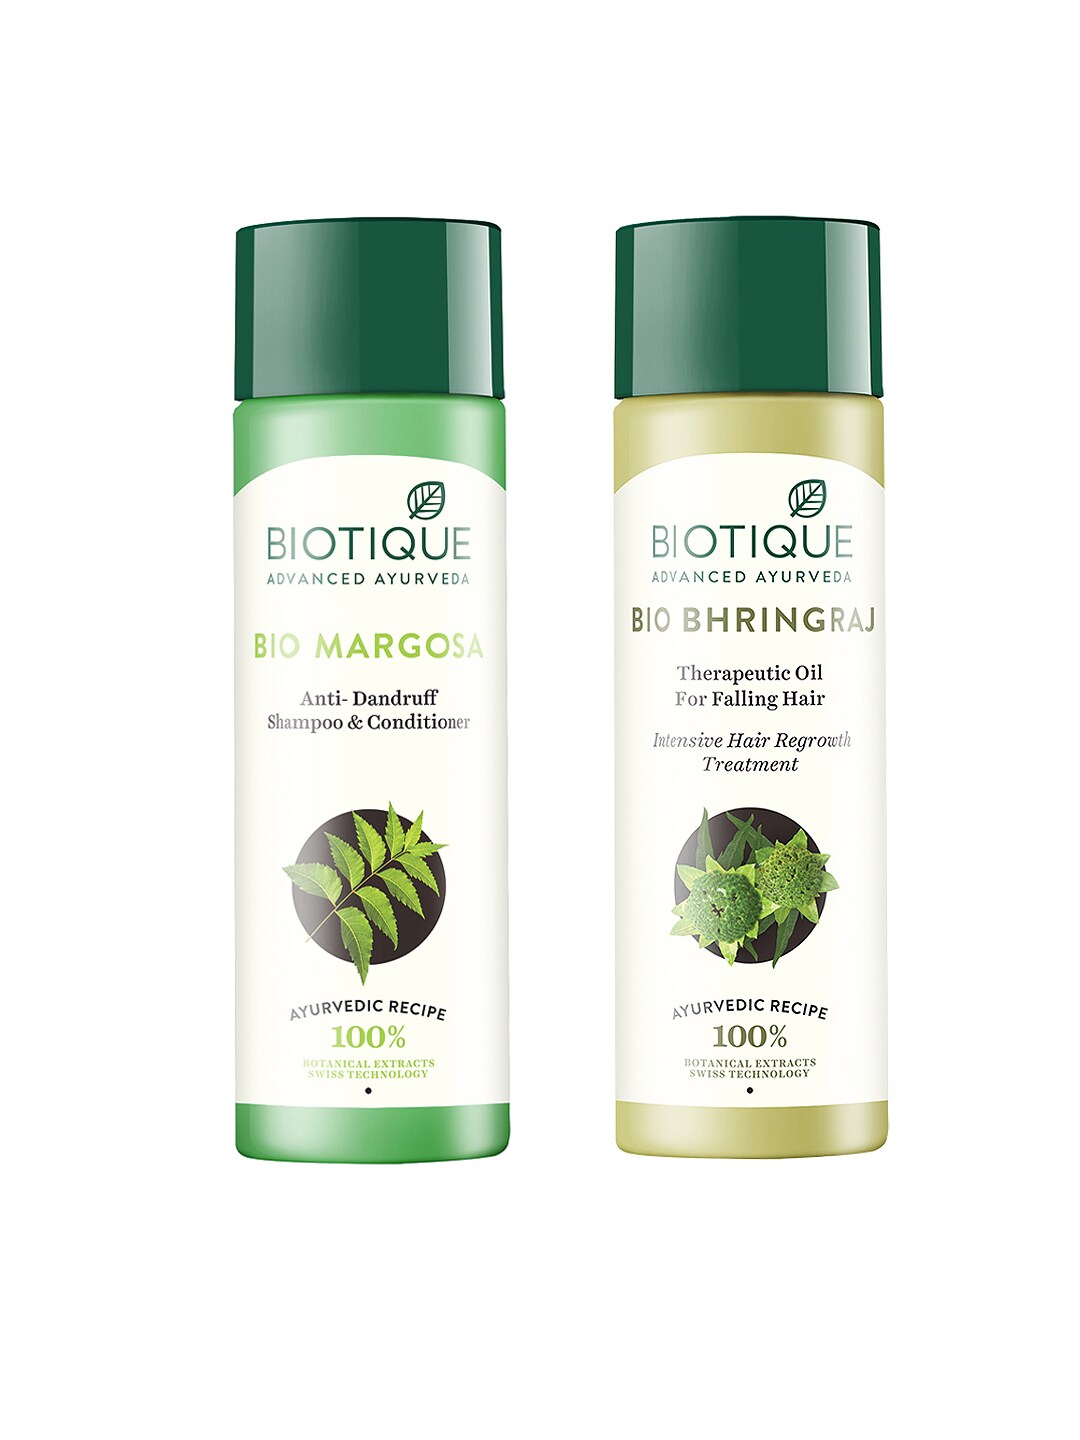 Biotique Bio Bhringraj Therapeutic Hair Oil & Bio Margosa Anti-Dandruff  Shampoo Price in India, Full Specifications & Offers 